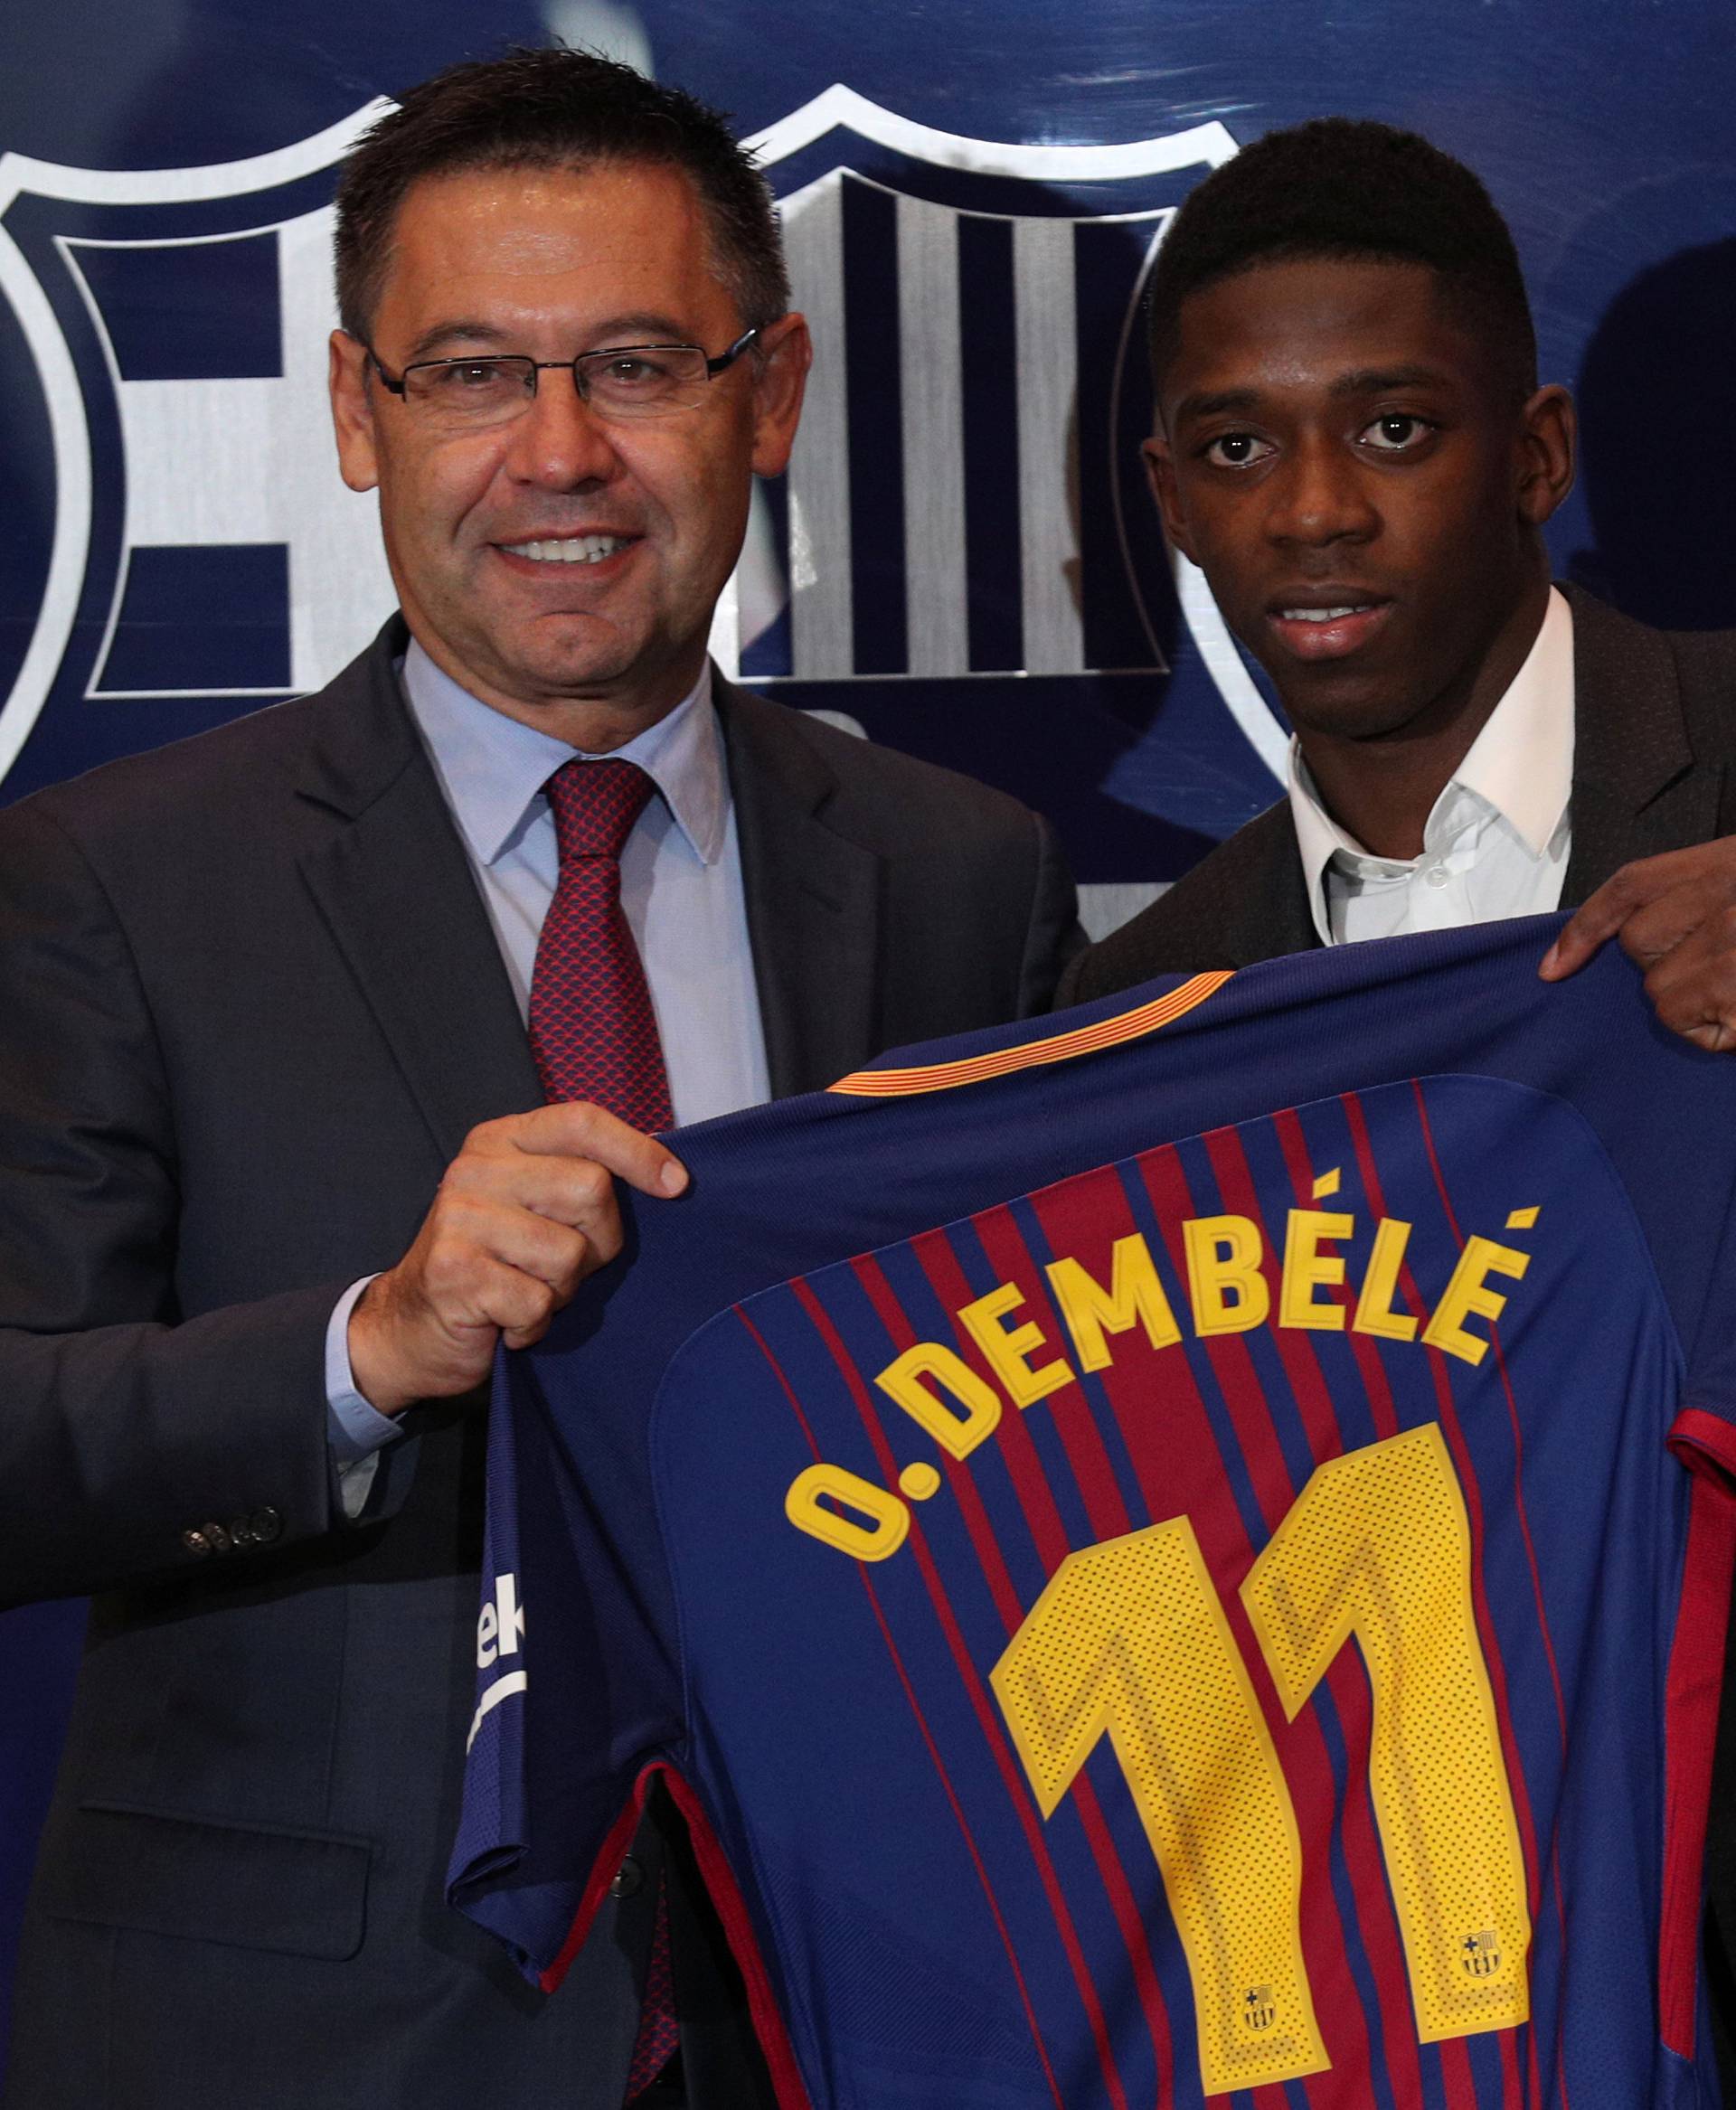 Soccer Football - FC Barcelona - Ousmane Dembele Presentation